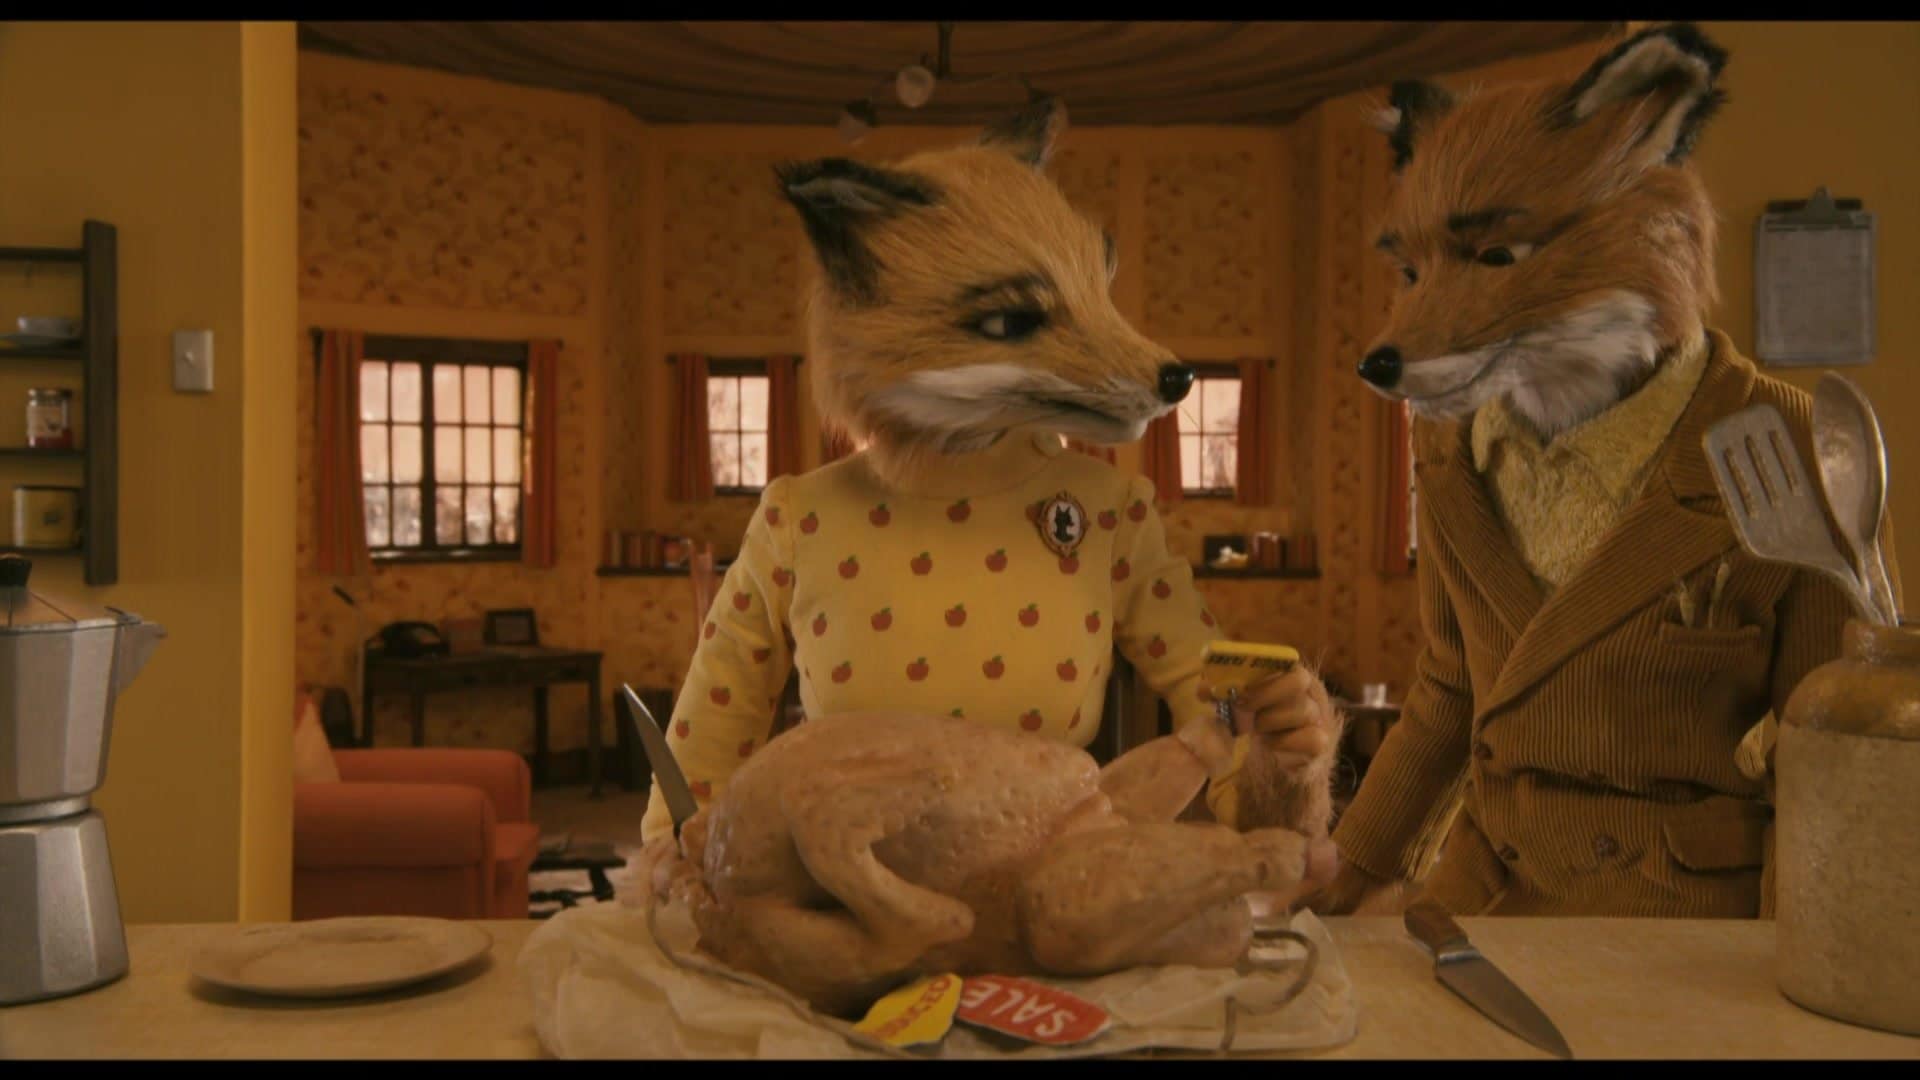 Mister fox. Бесподобный Мистер Фокс. Бесподобный Мистер ФОК. Бесподобный Мистер Фокс (fantastic Mr. Fox), 2009. Мистер Лис Уэс Андерсон.